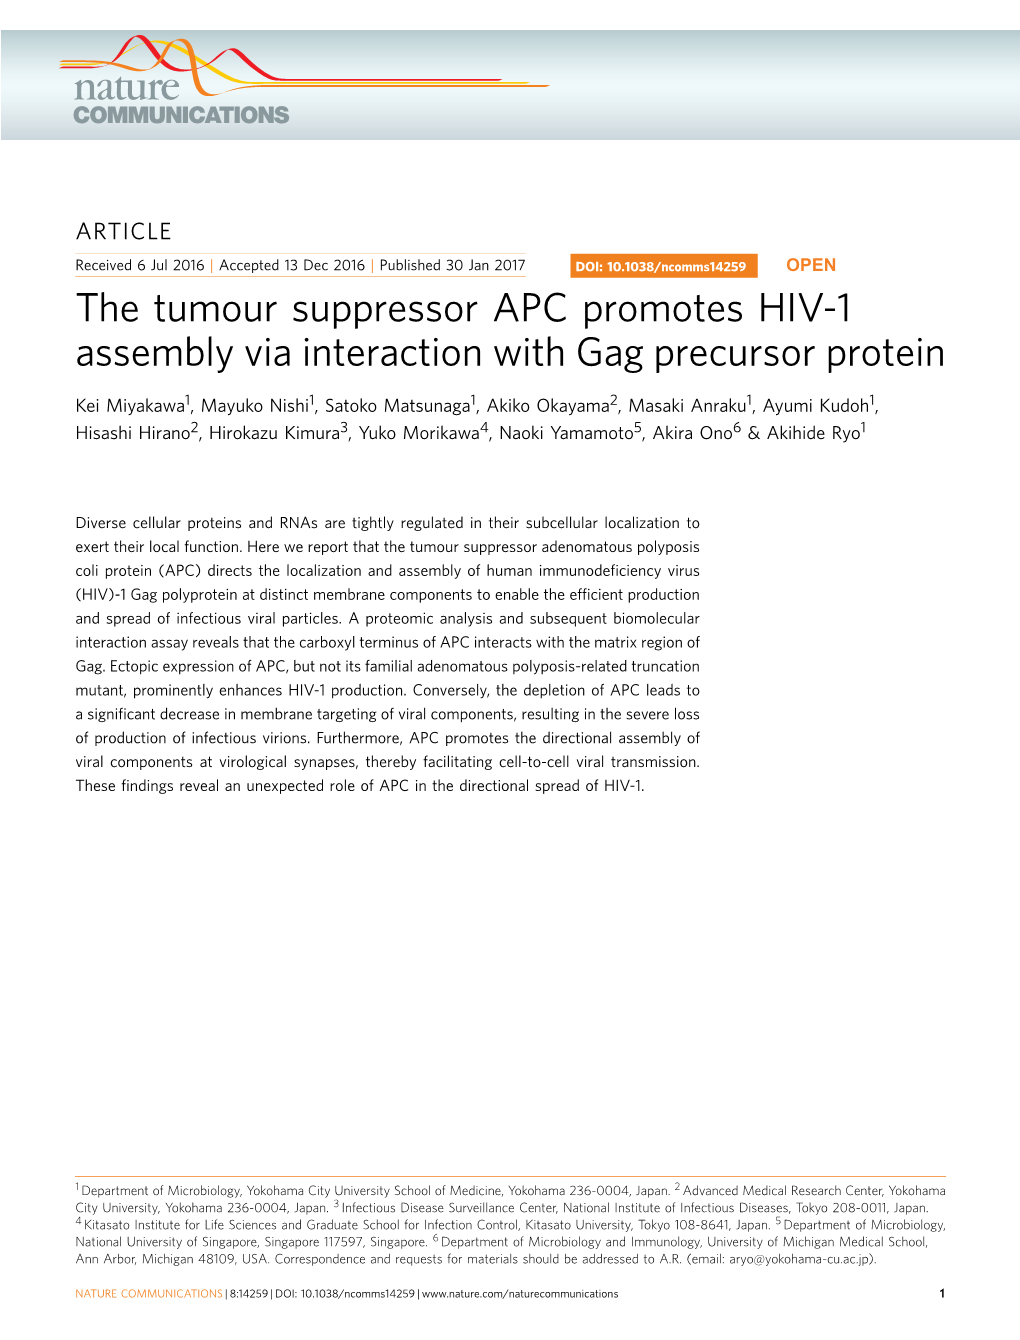 The Tumour Suppressor APC Promotes HIV-1 Assembly Via Interaction with Gag Precursor Protein